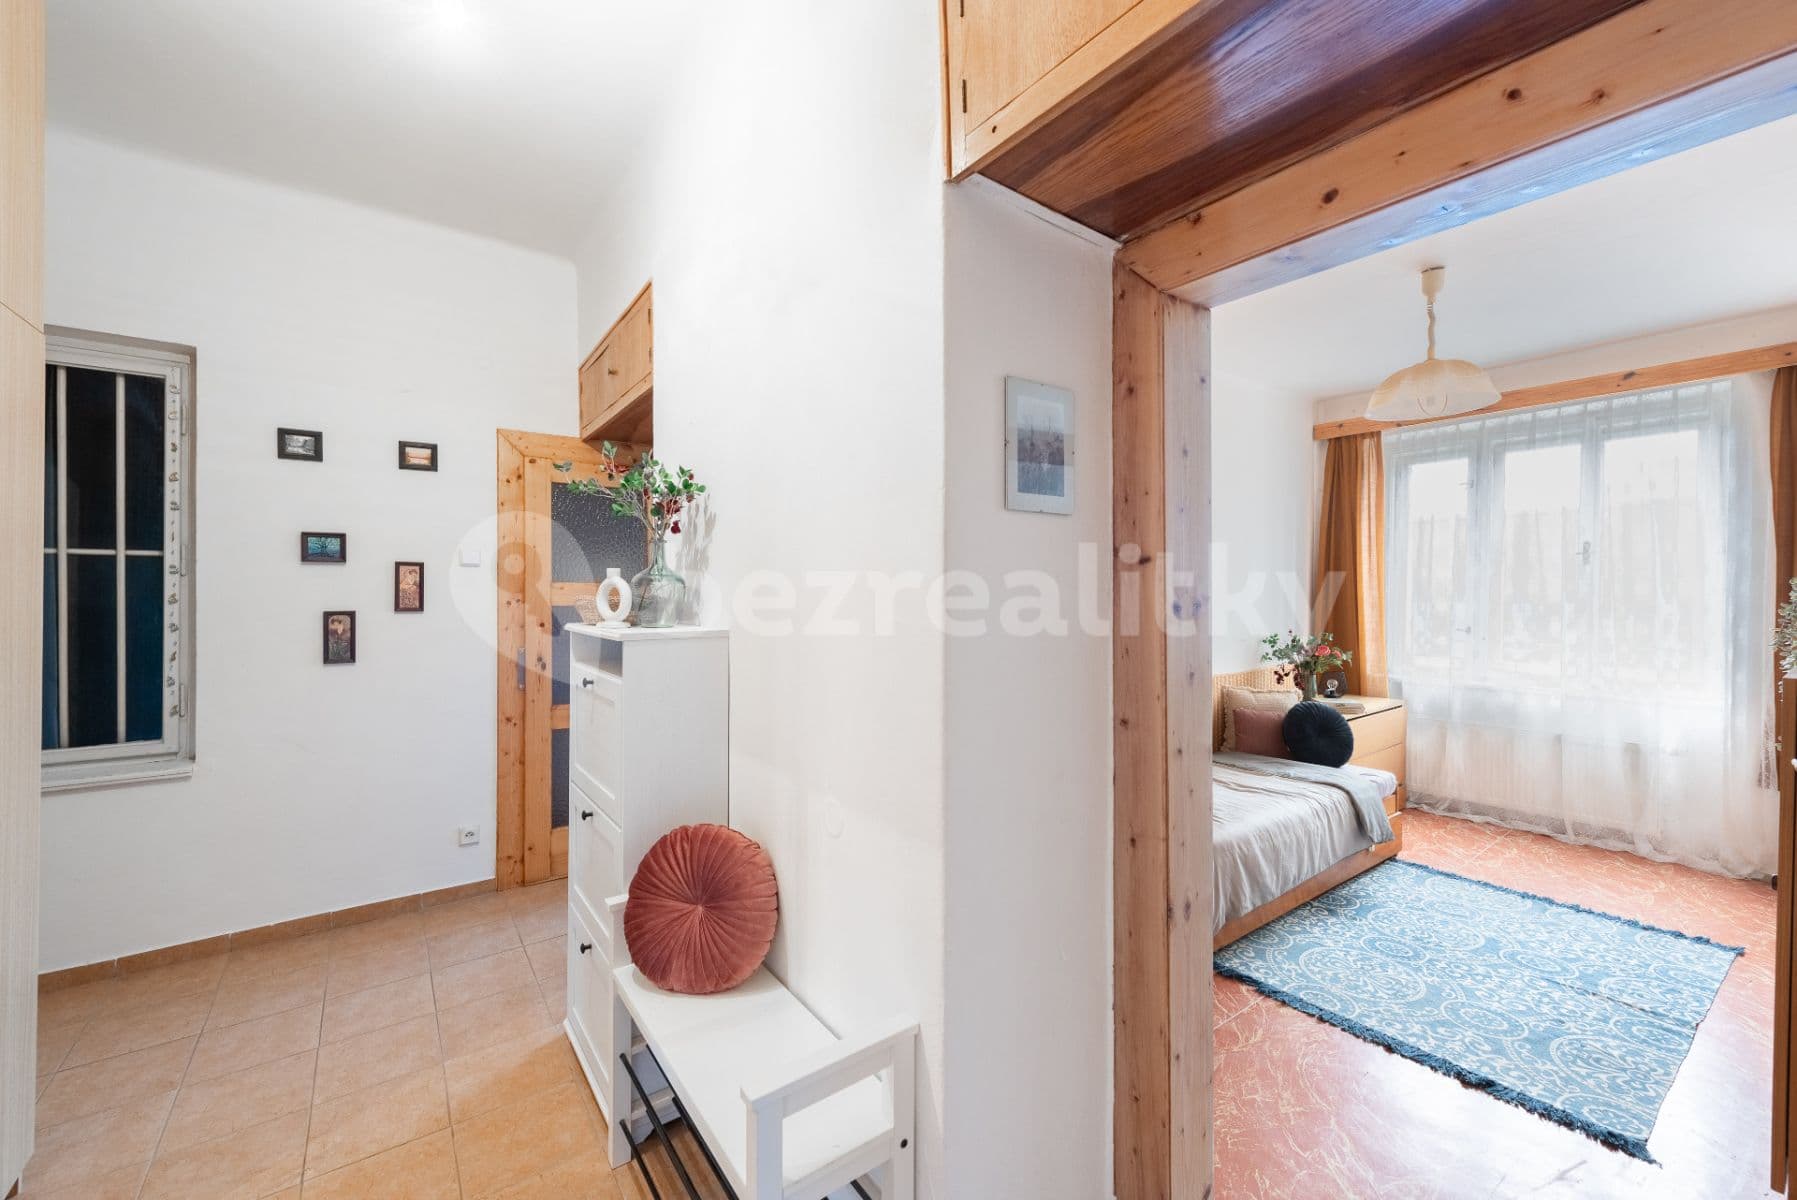 2 bedroom with open-plan kitchen flat for sale, 68 m², Kouřimská, Prague, Prague